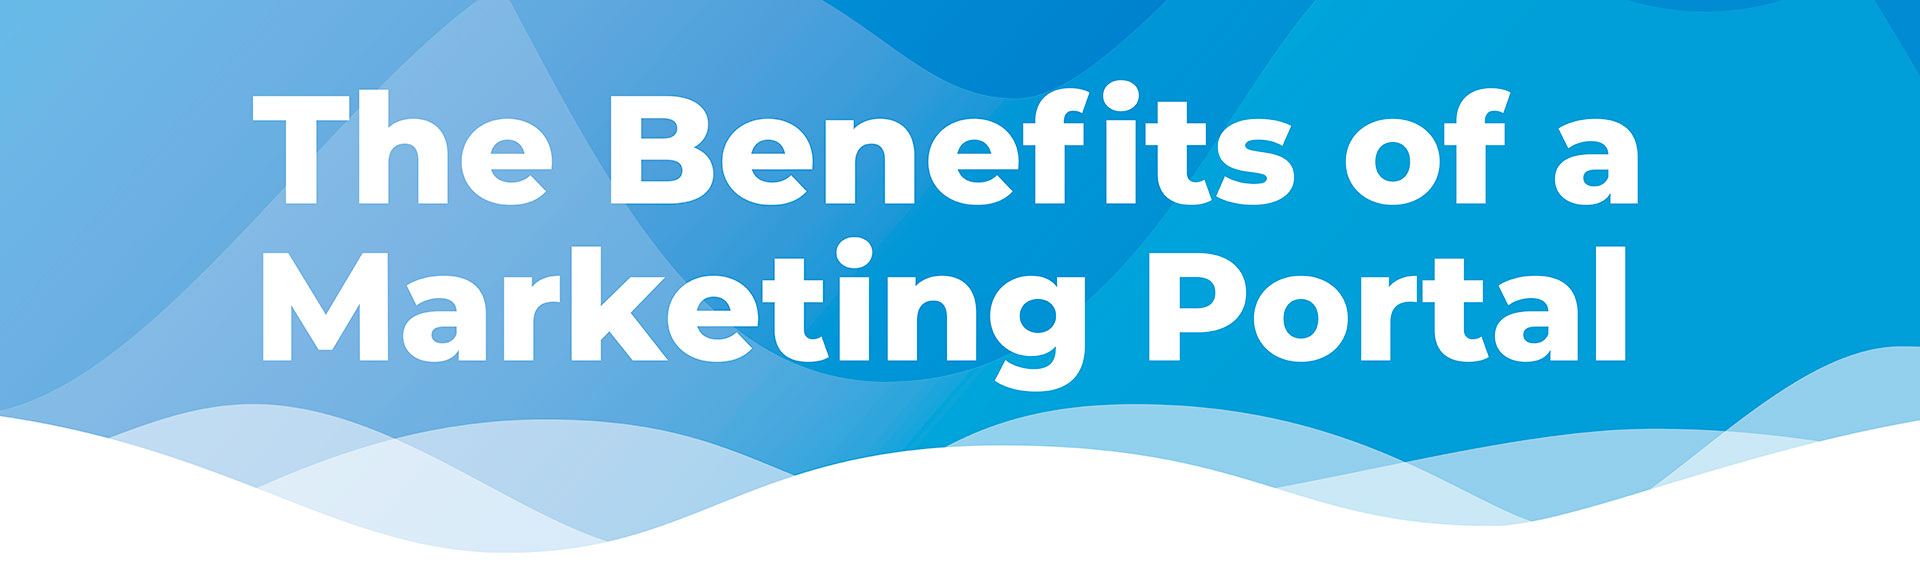 Benefits-of-a-Marketing-Portal